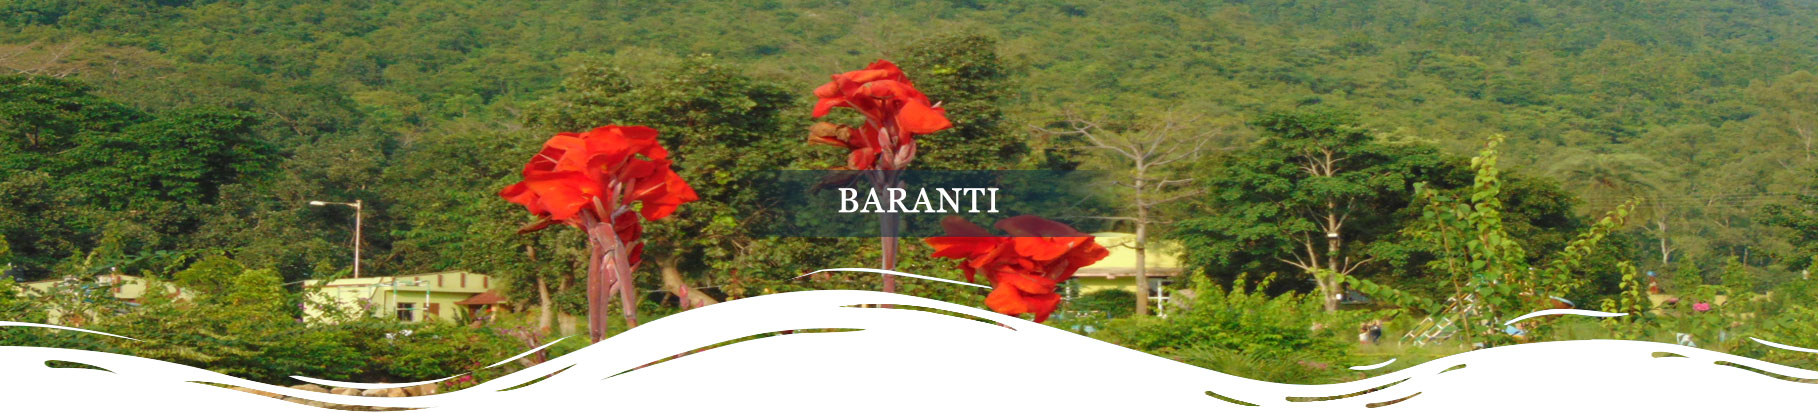 baranti tour from kolkata